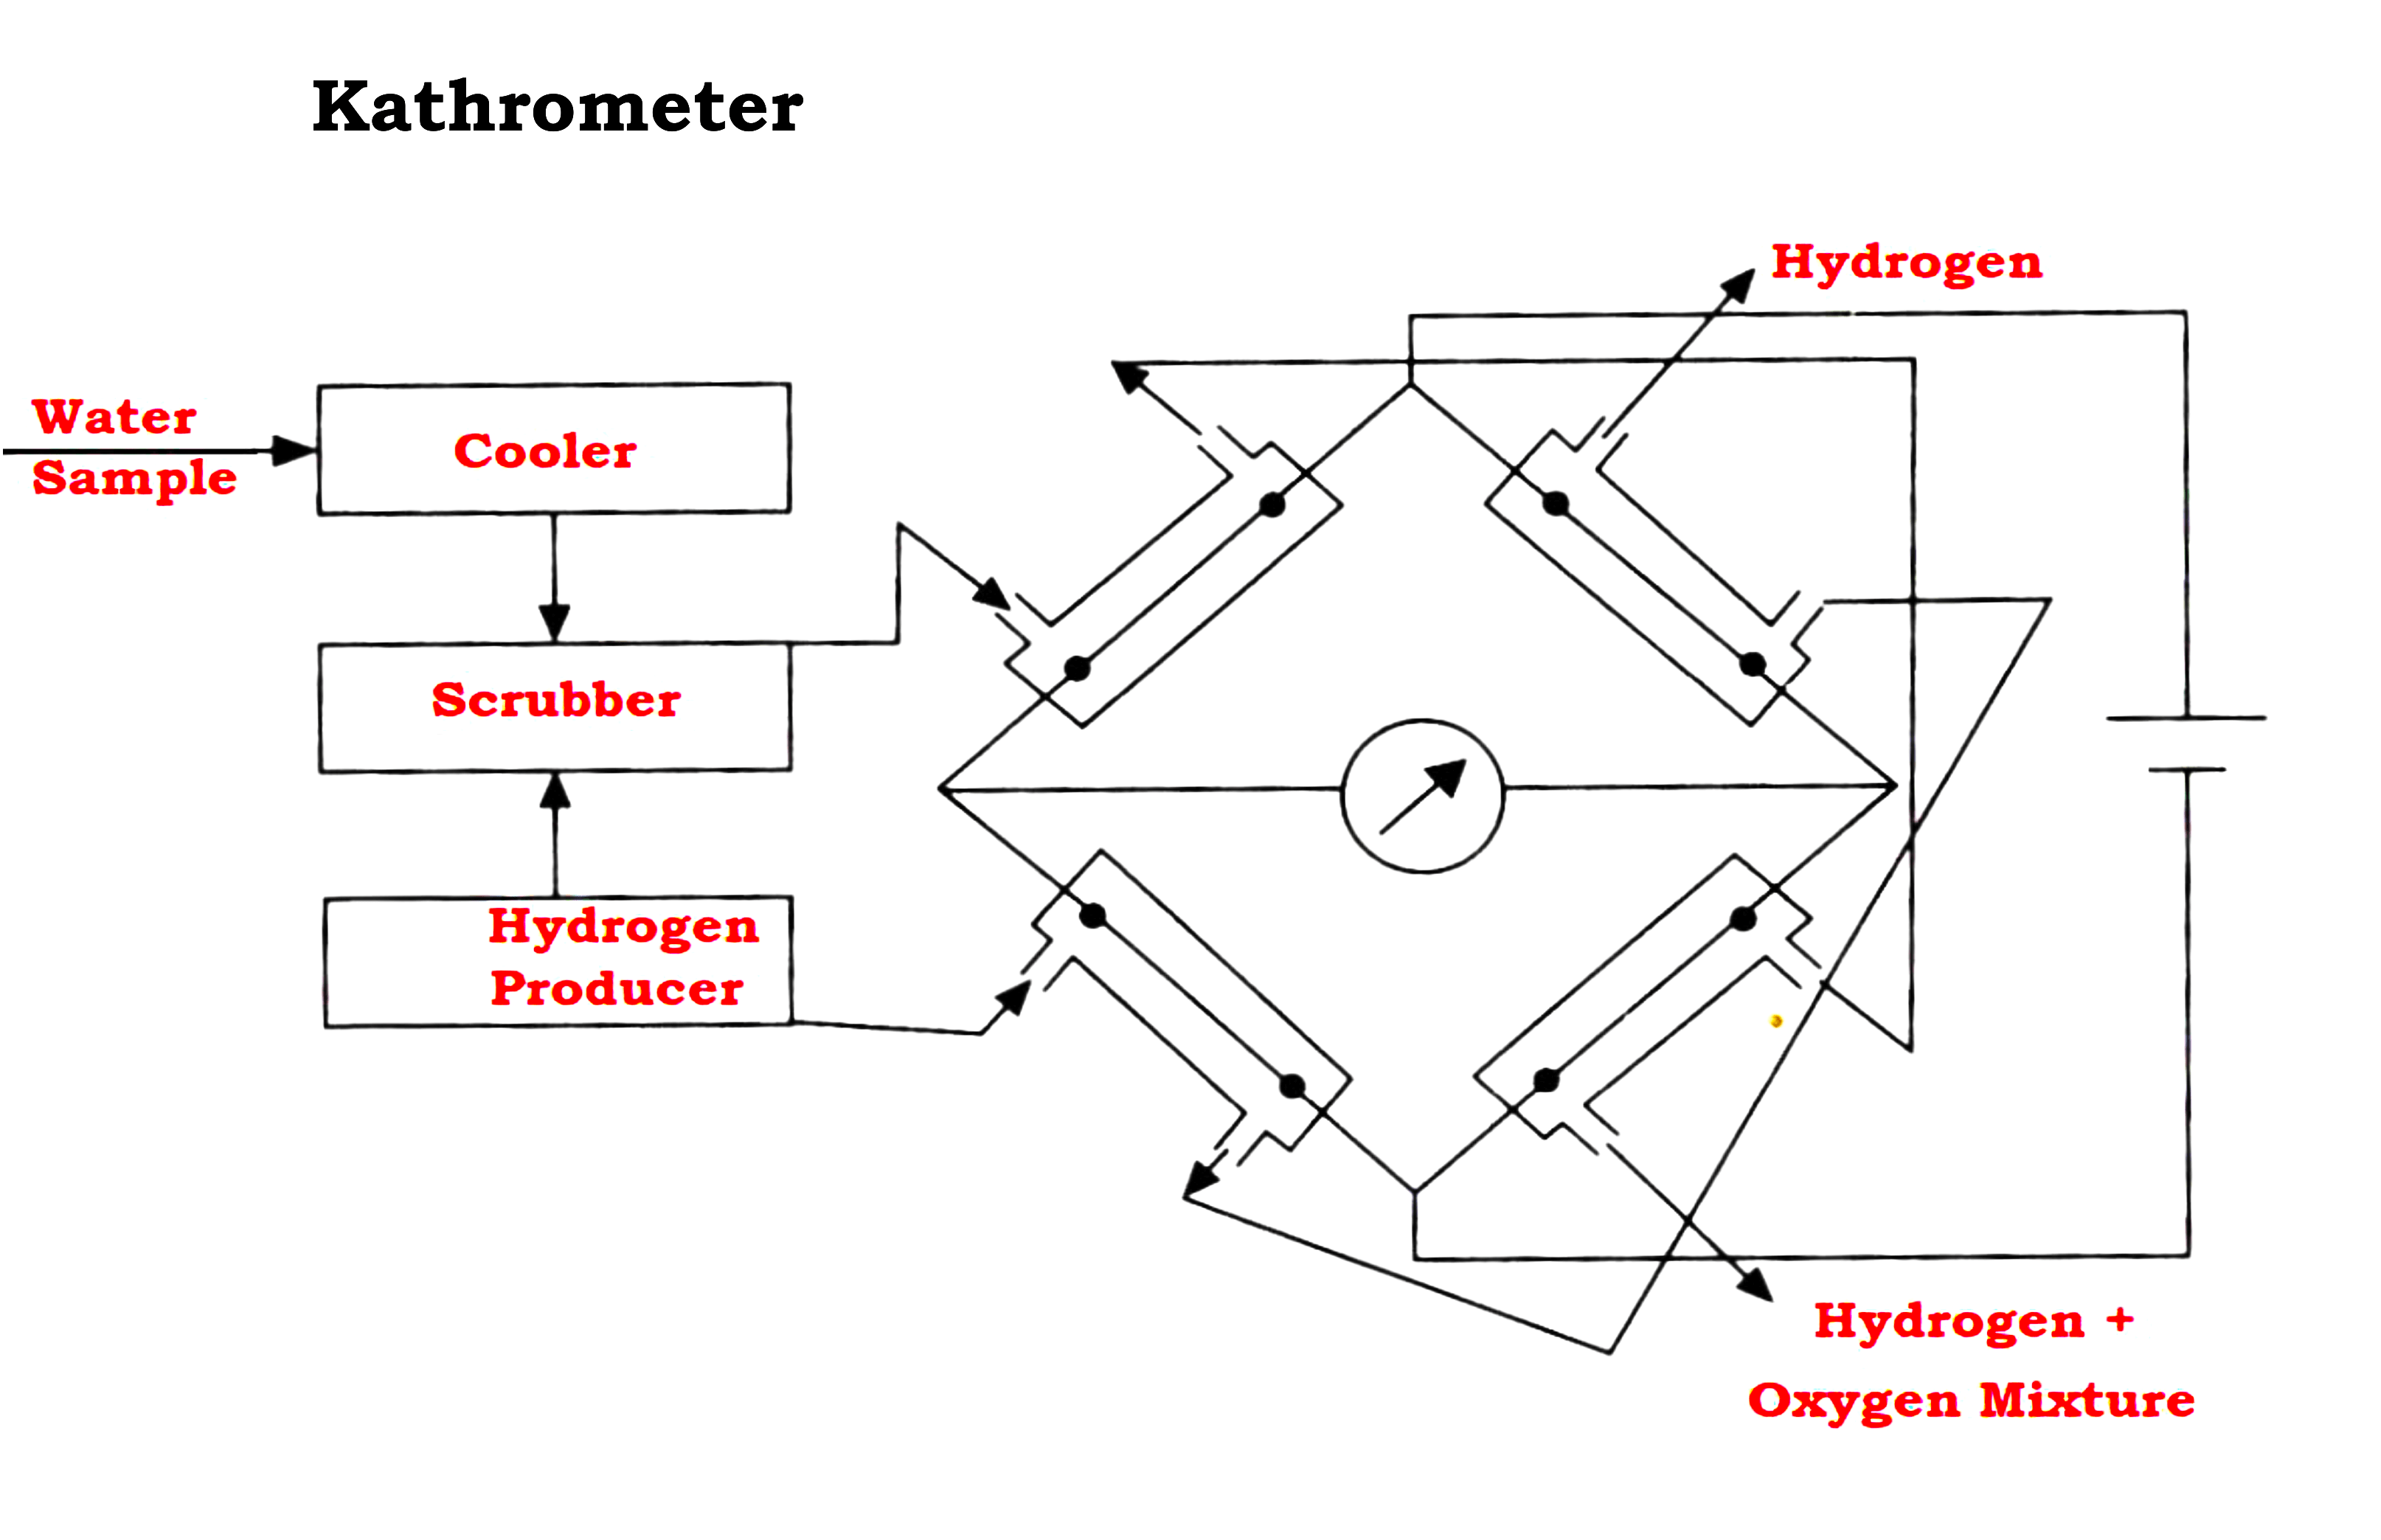 Kathrometer